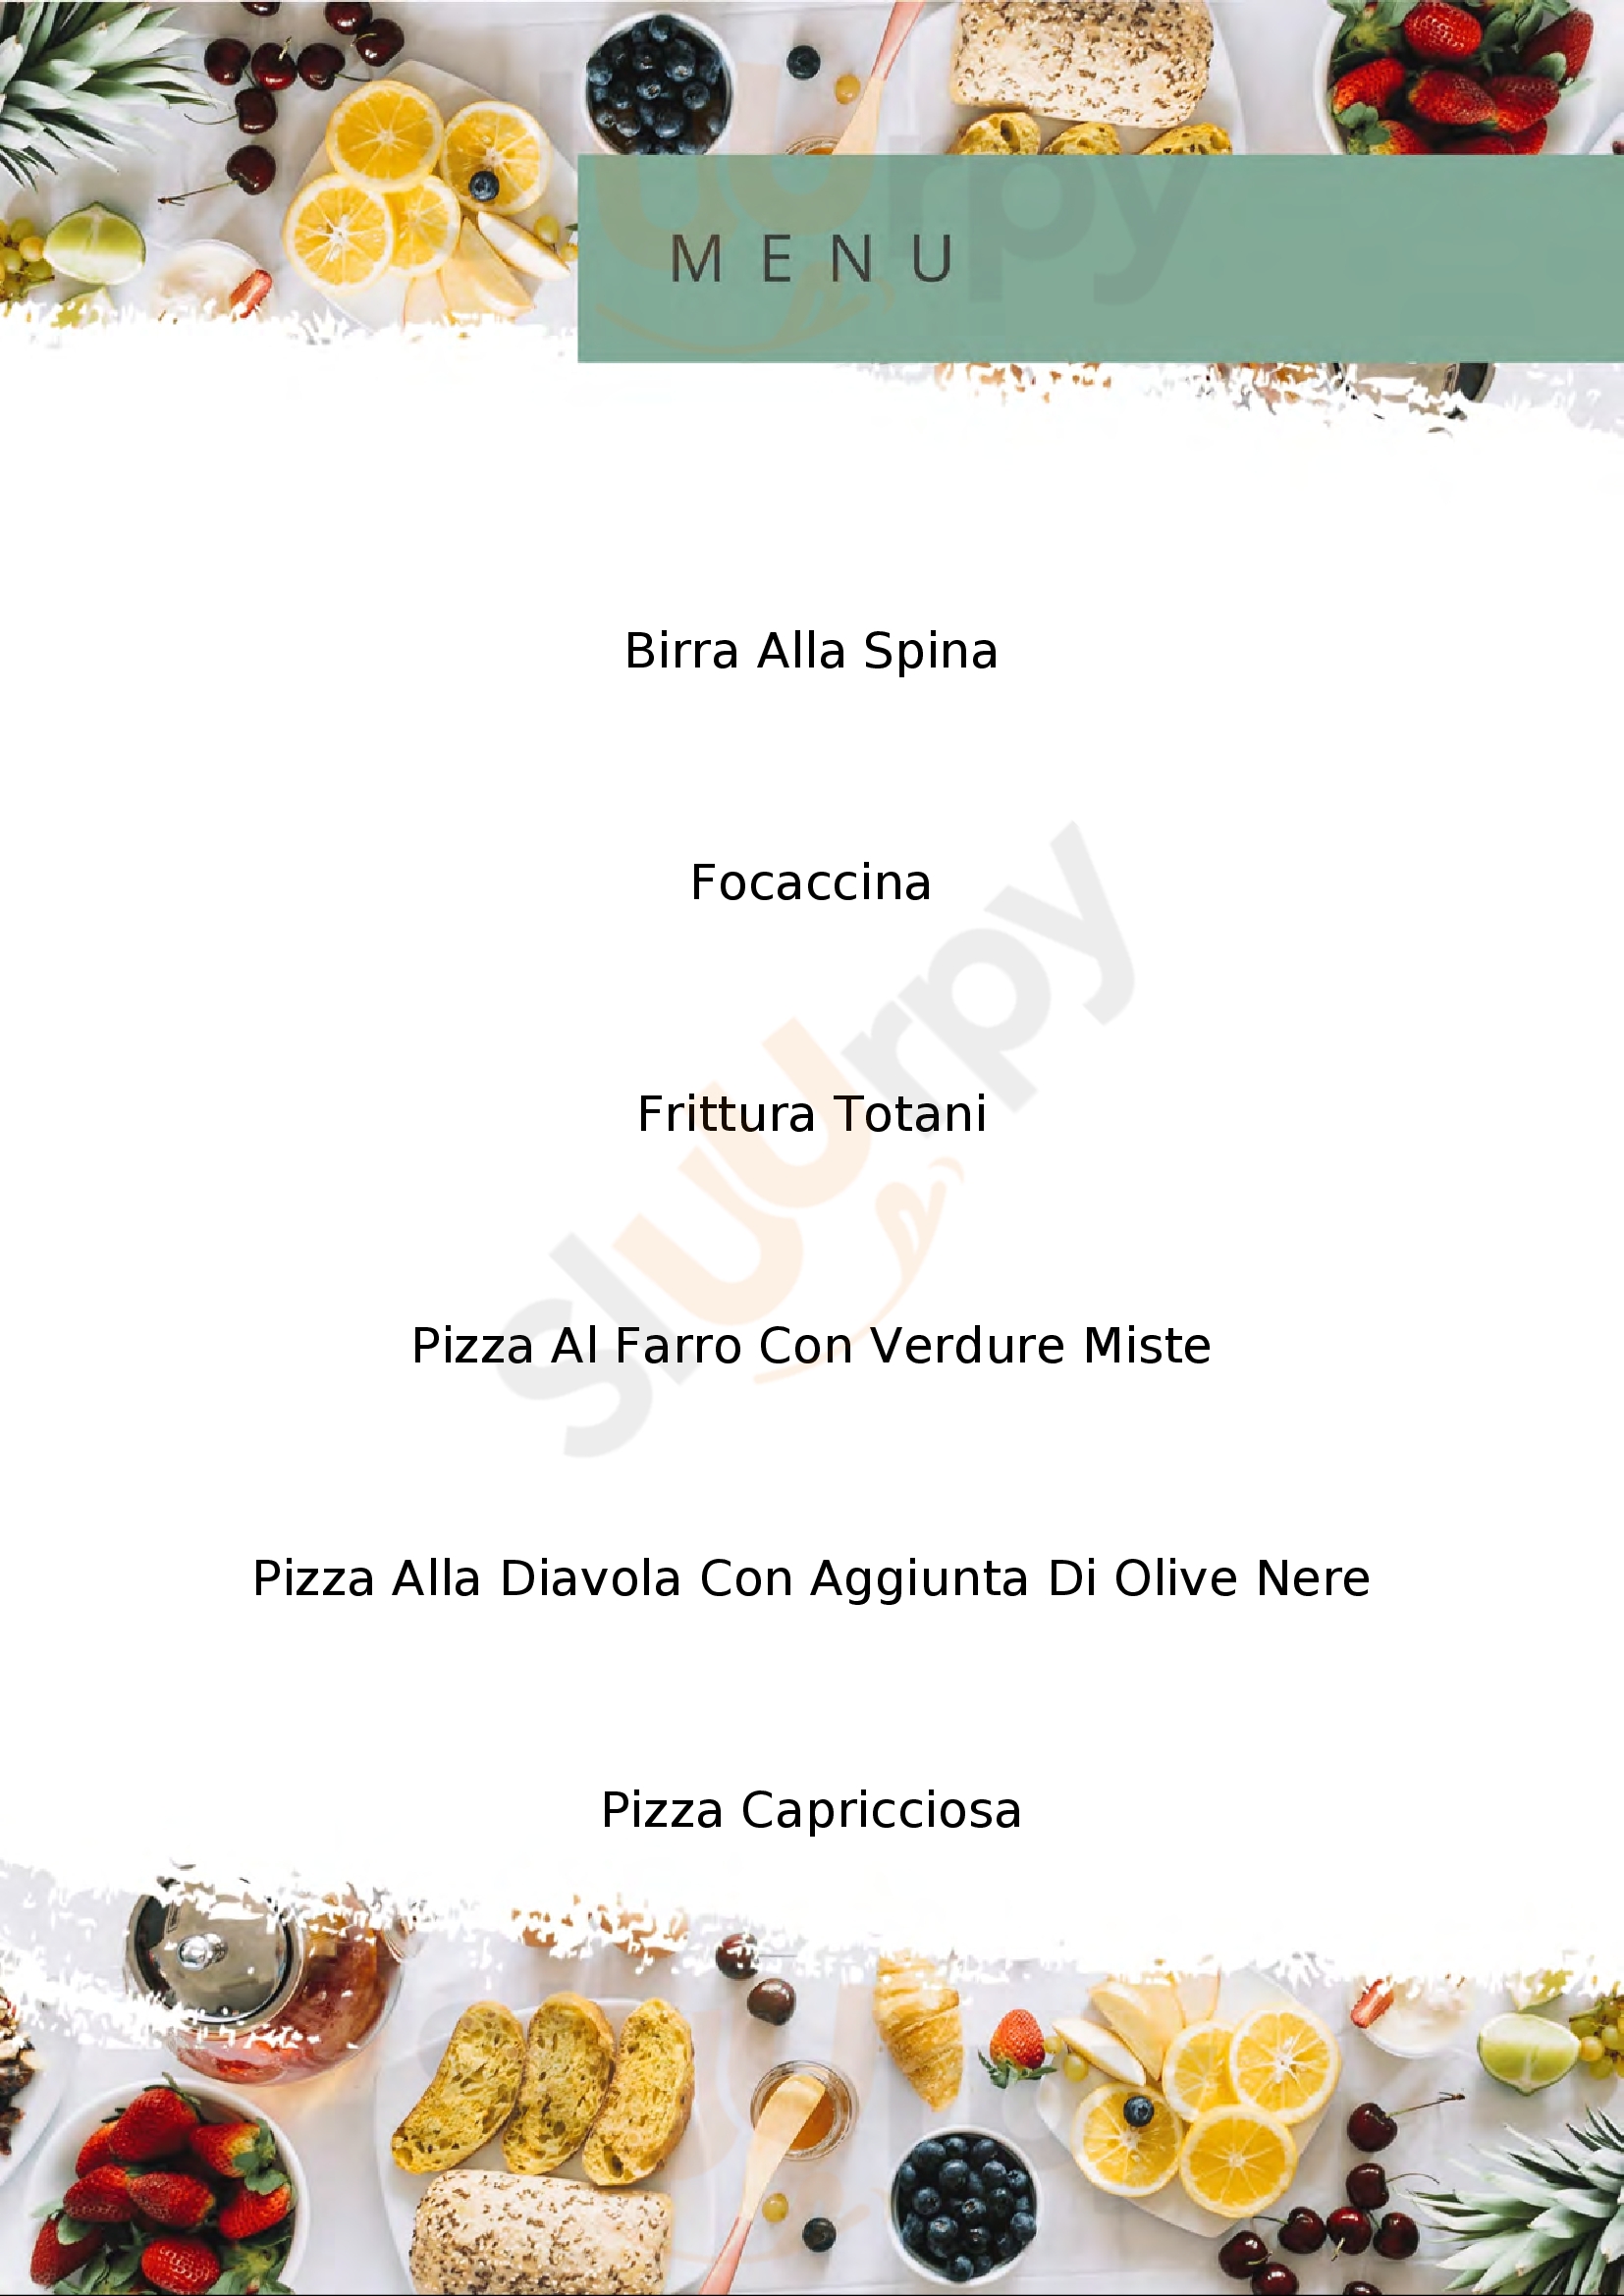 Vince Pizza Follonica menù 1 pagina